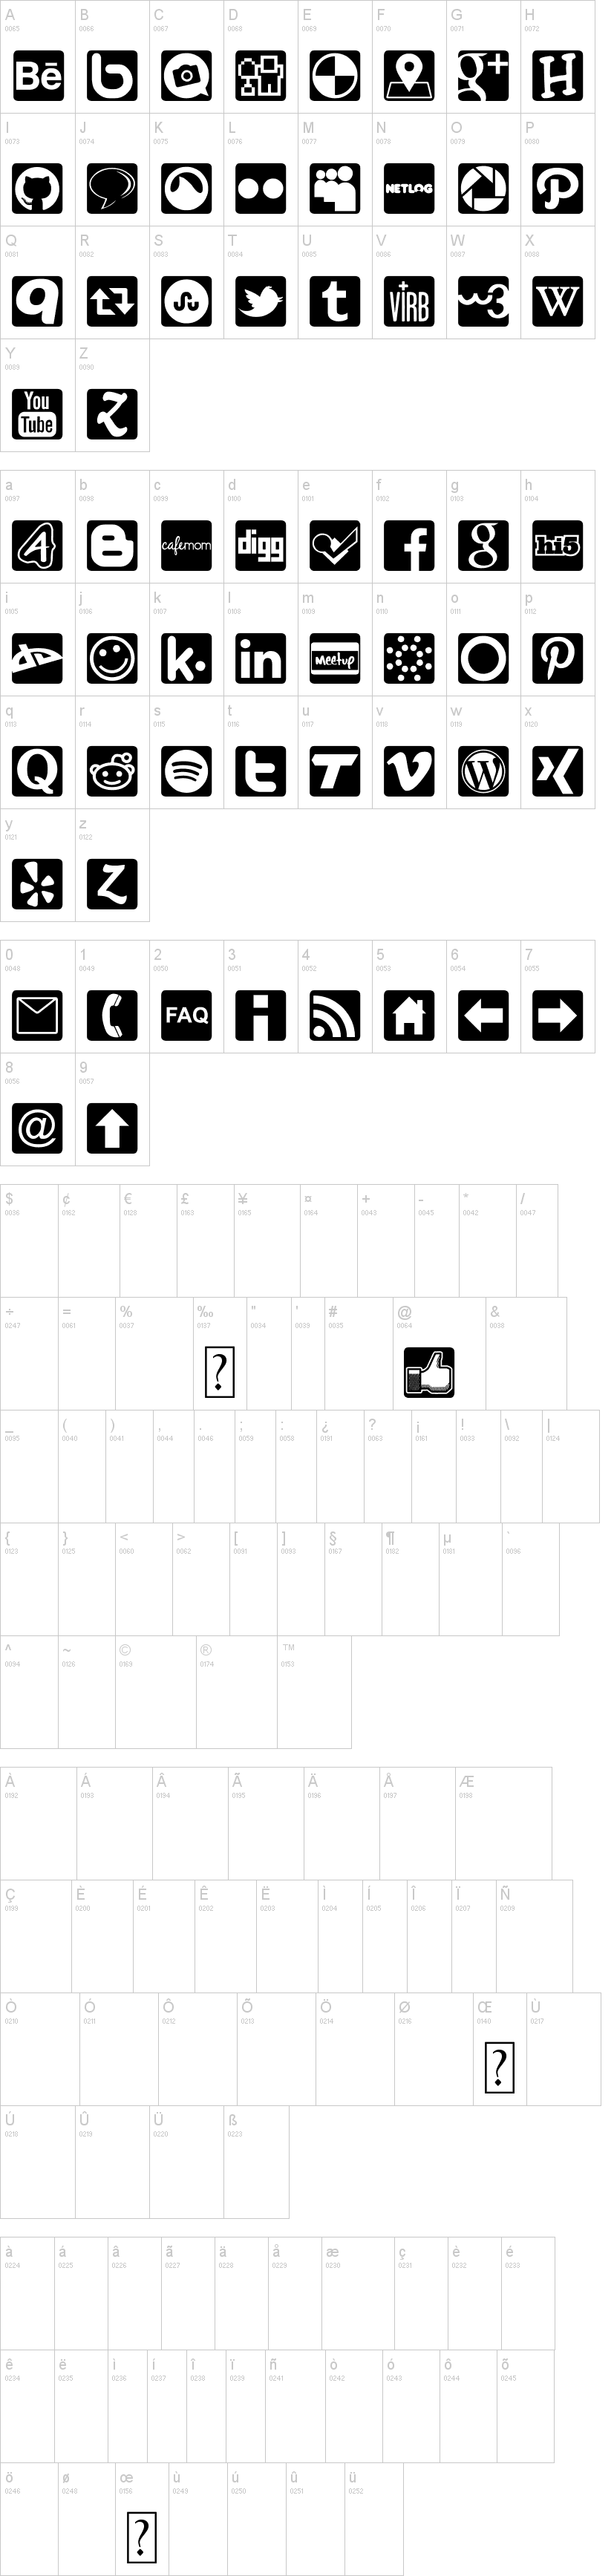 Social Icons - Pro Set